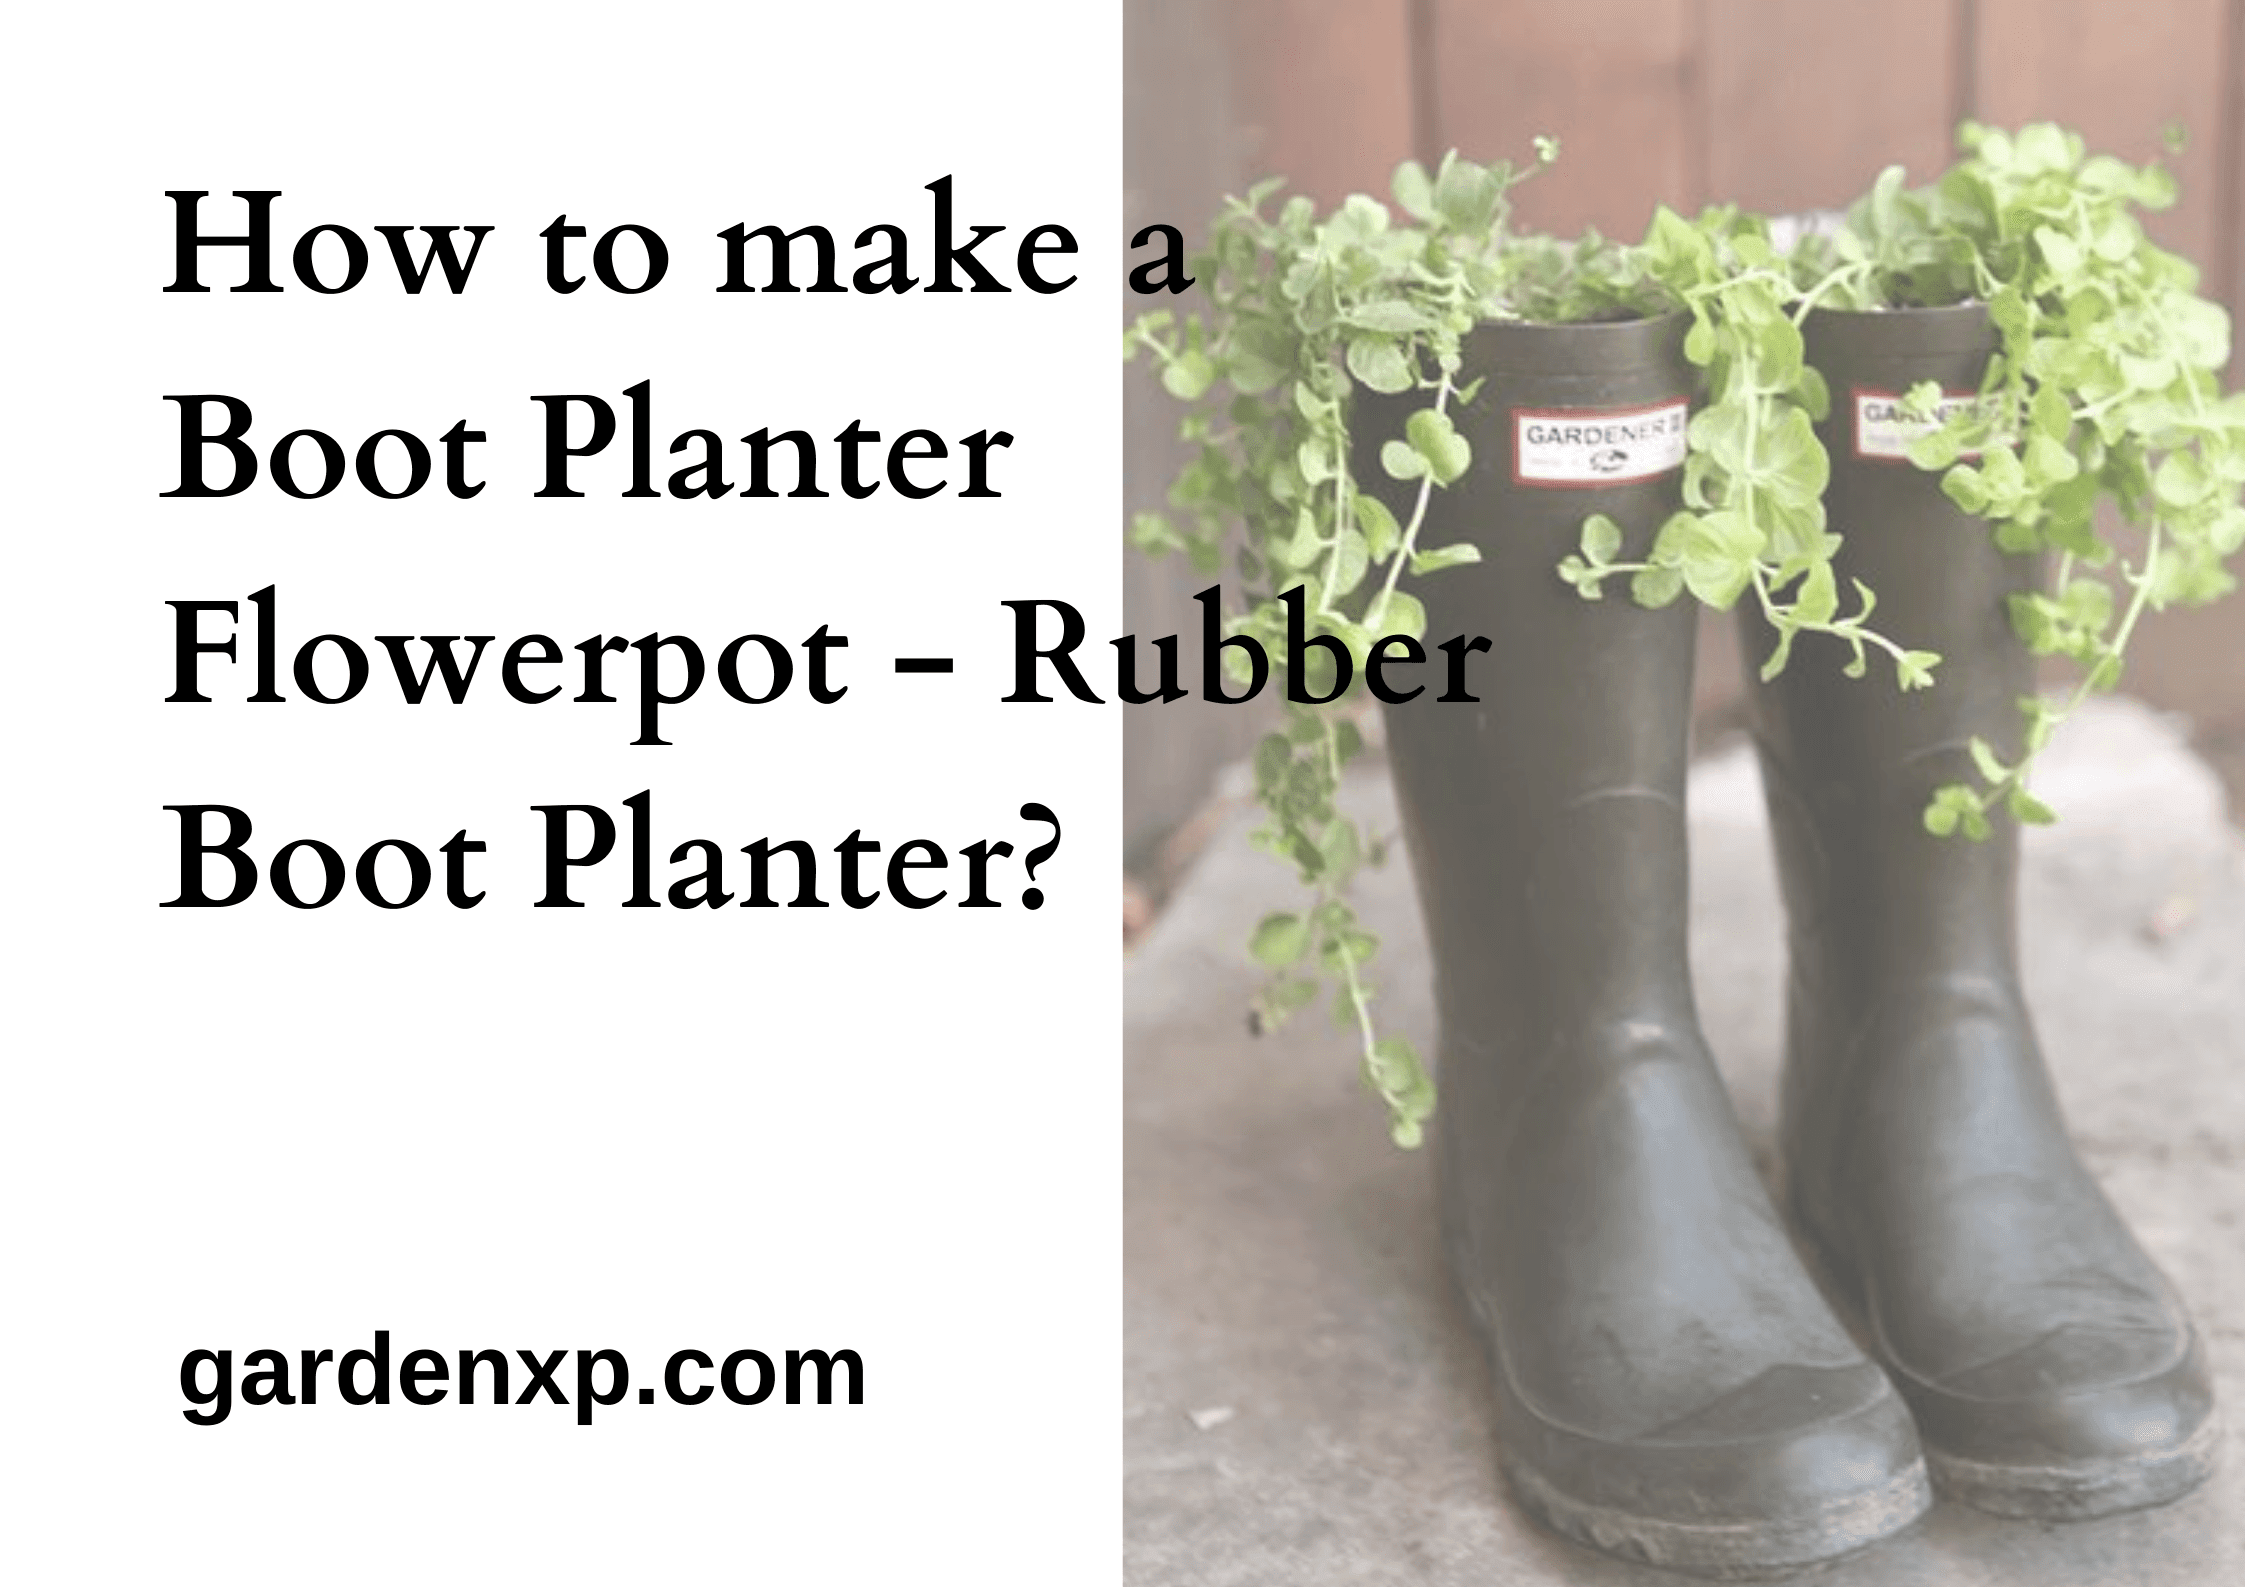 How to make a Boot Planter Flowerpot - Rubber Boot Planter (1)